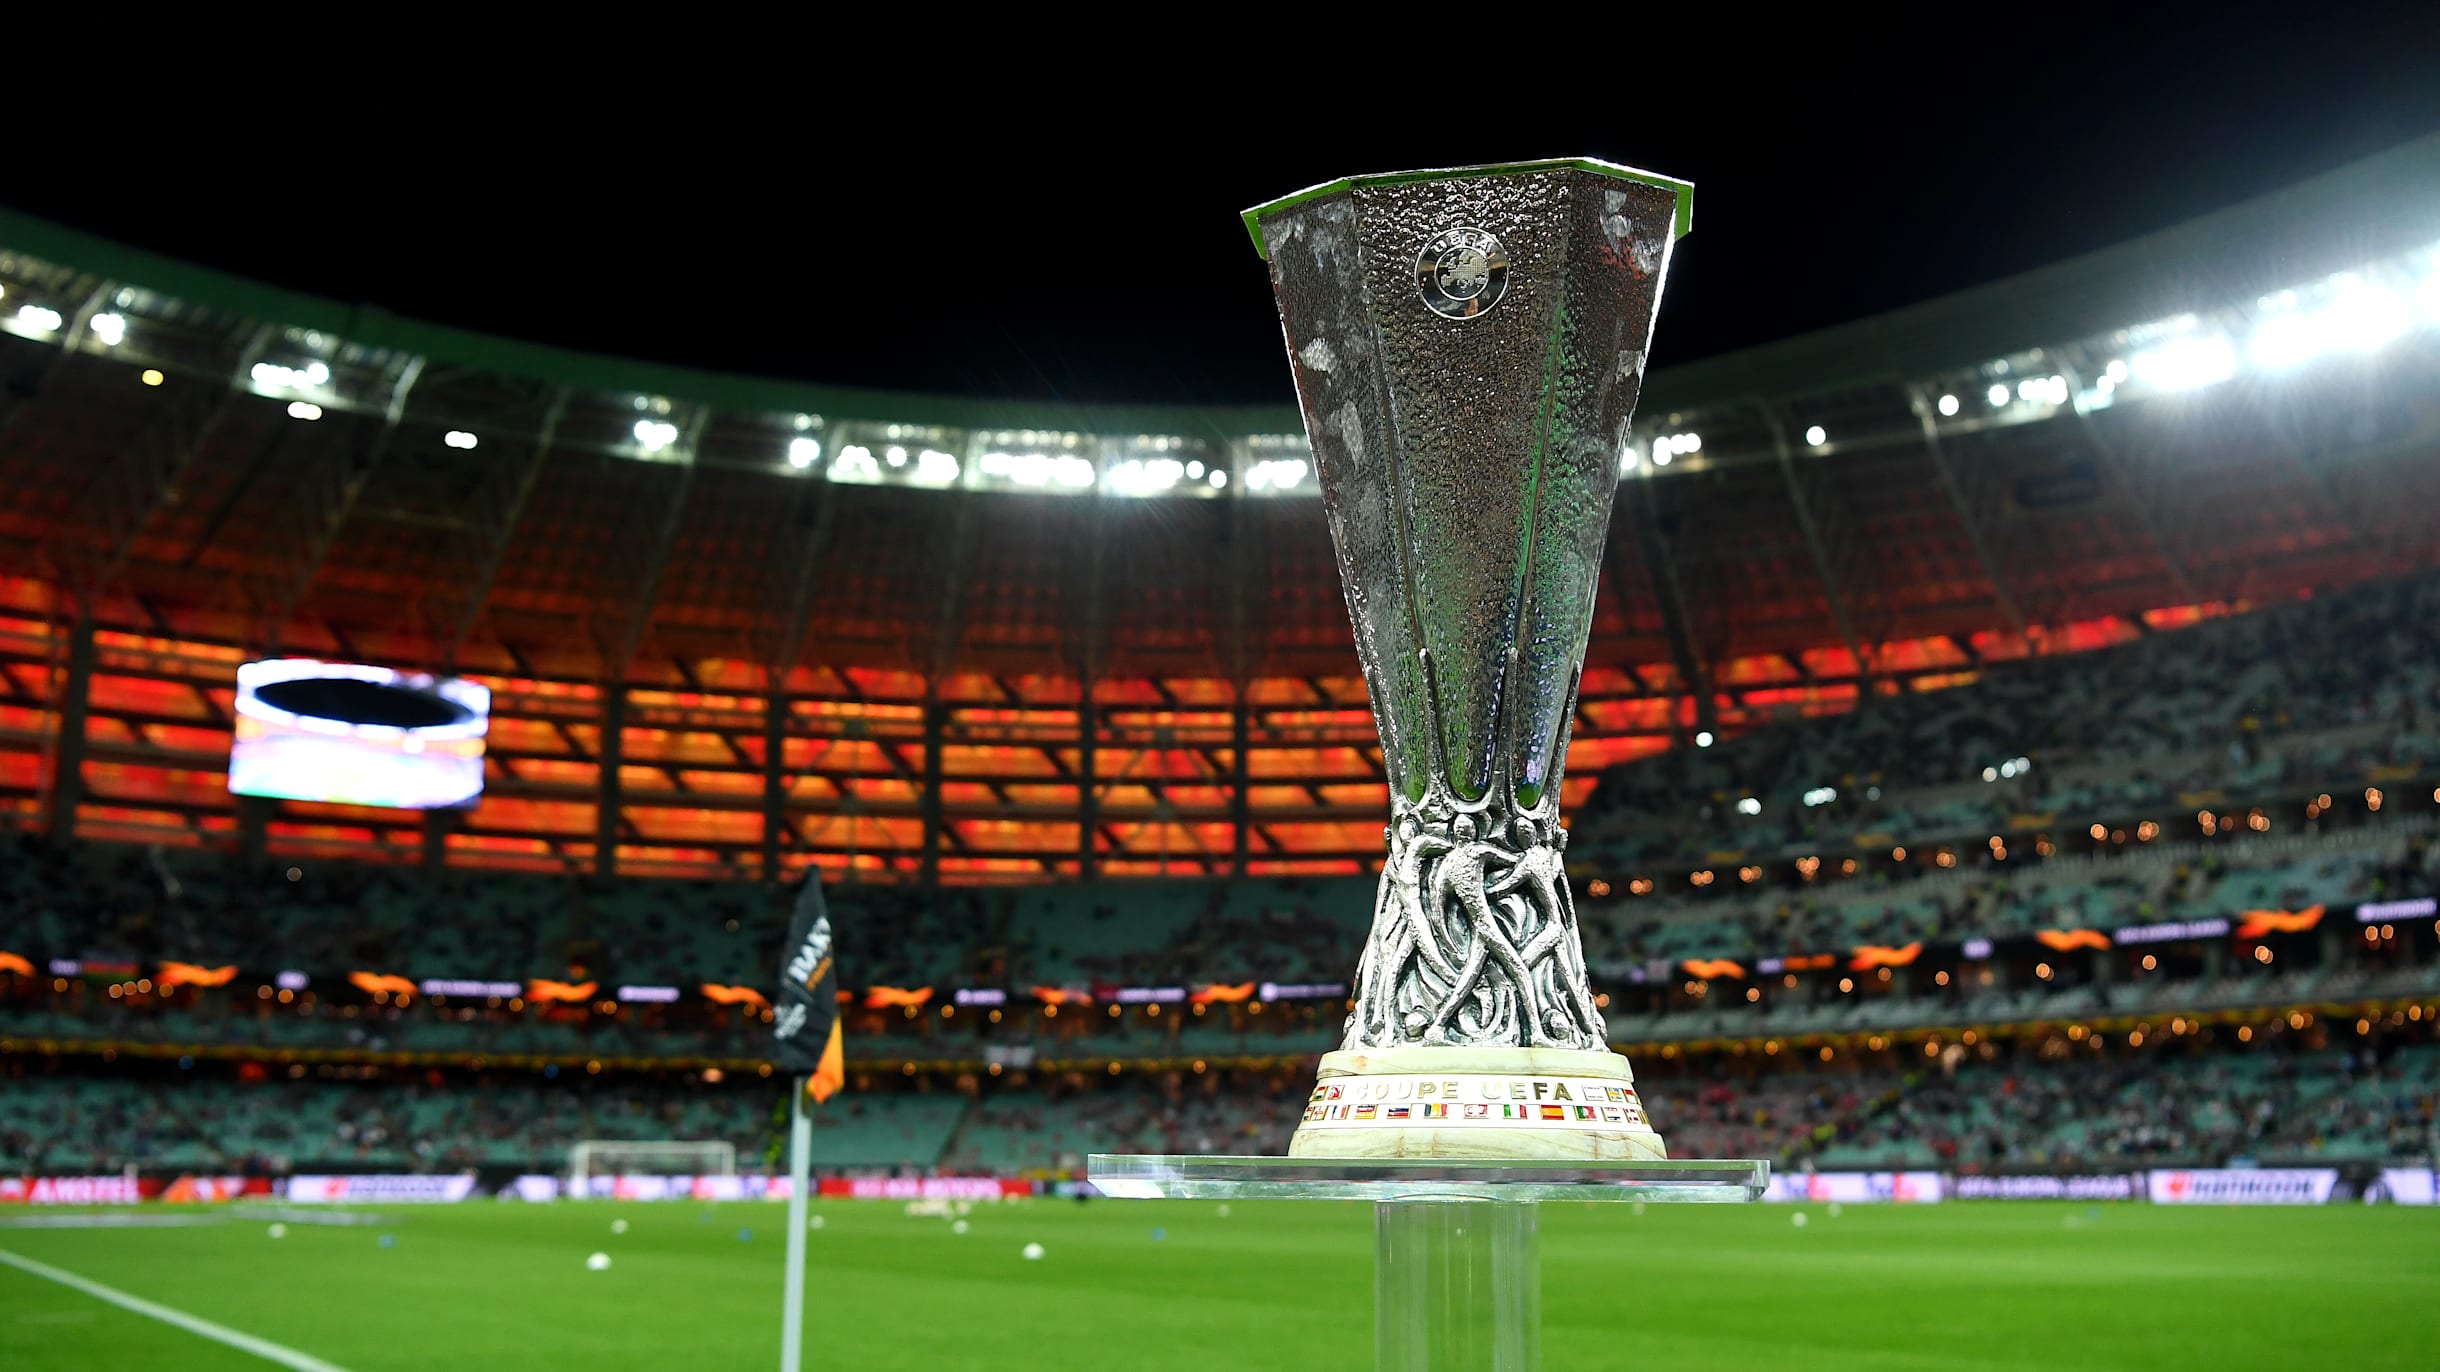 SK Slavia Prague vs. Arsenal, 2020-21 UEFA Europa League Quarter Final